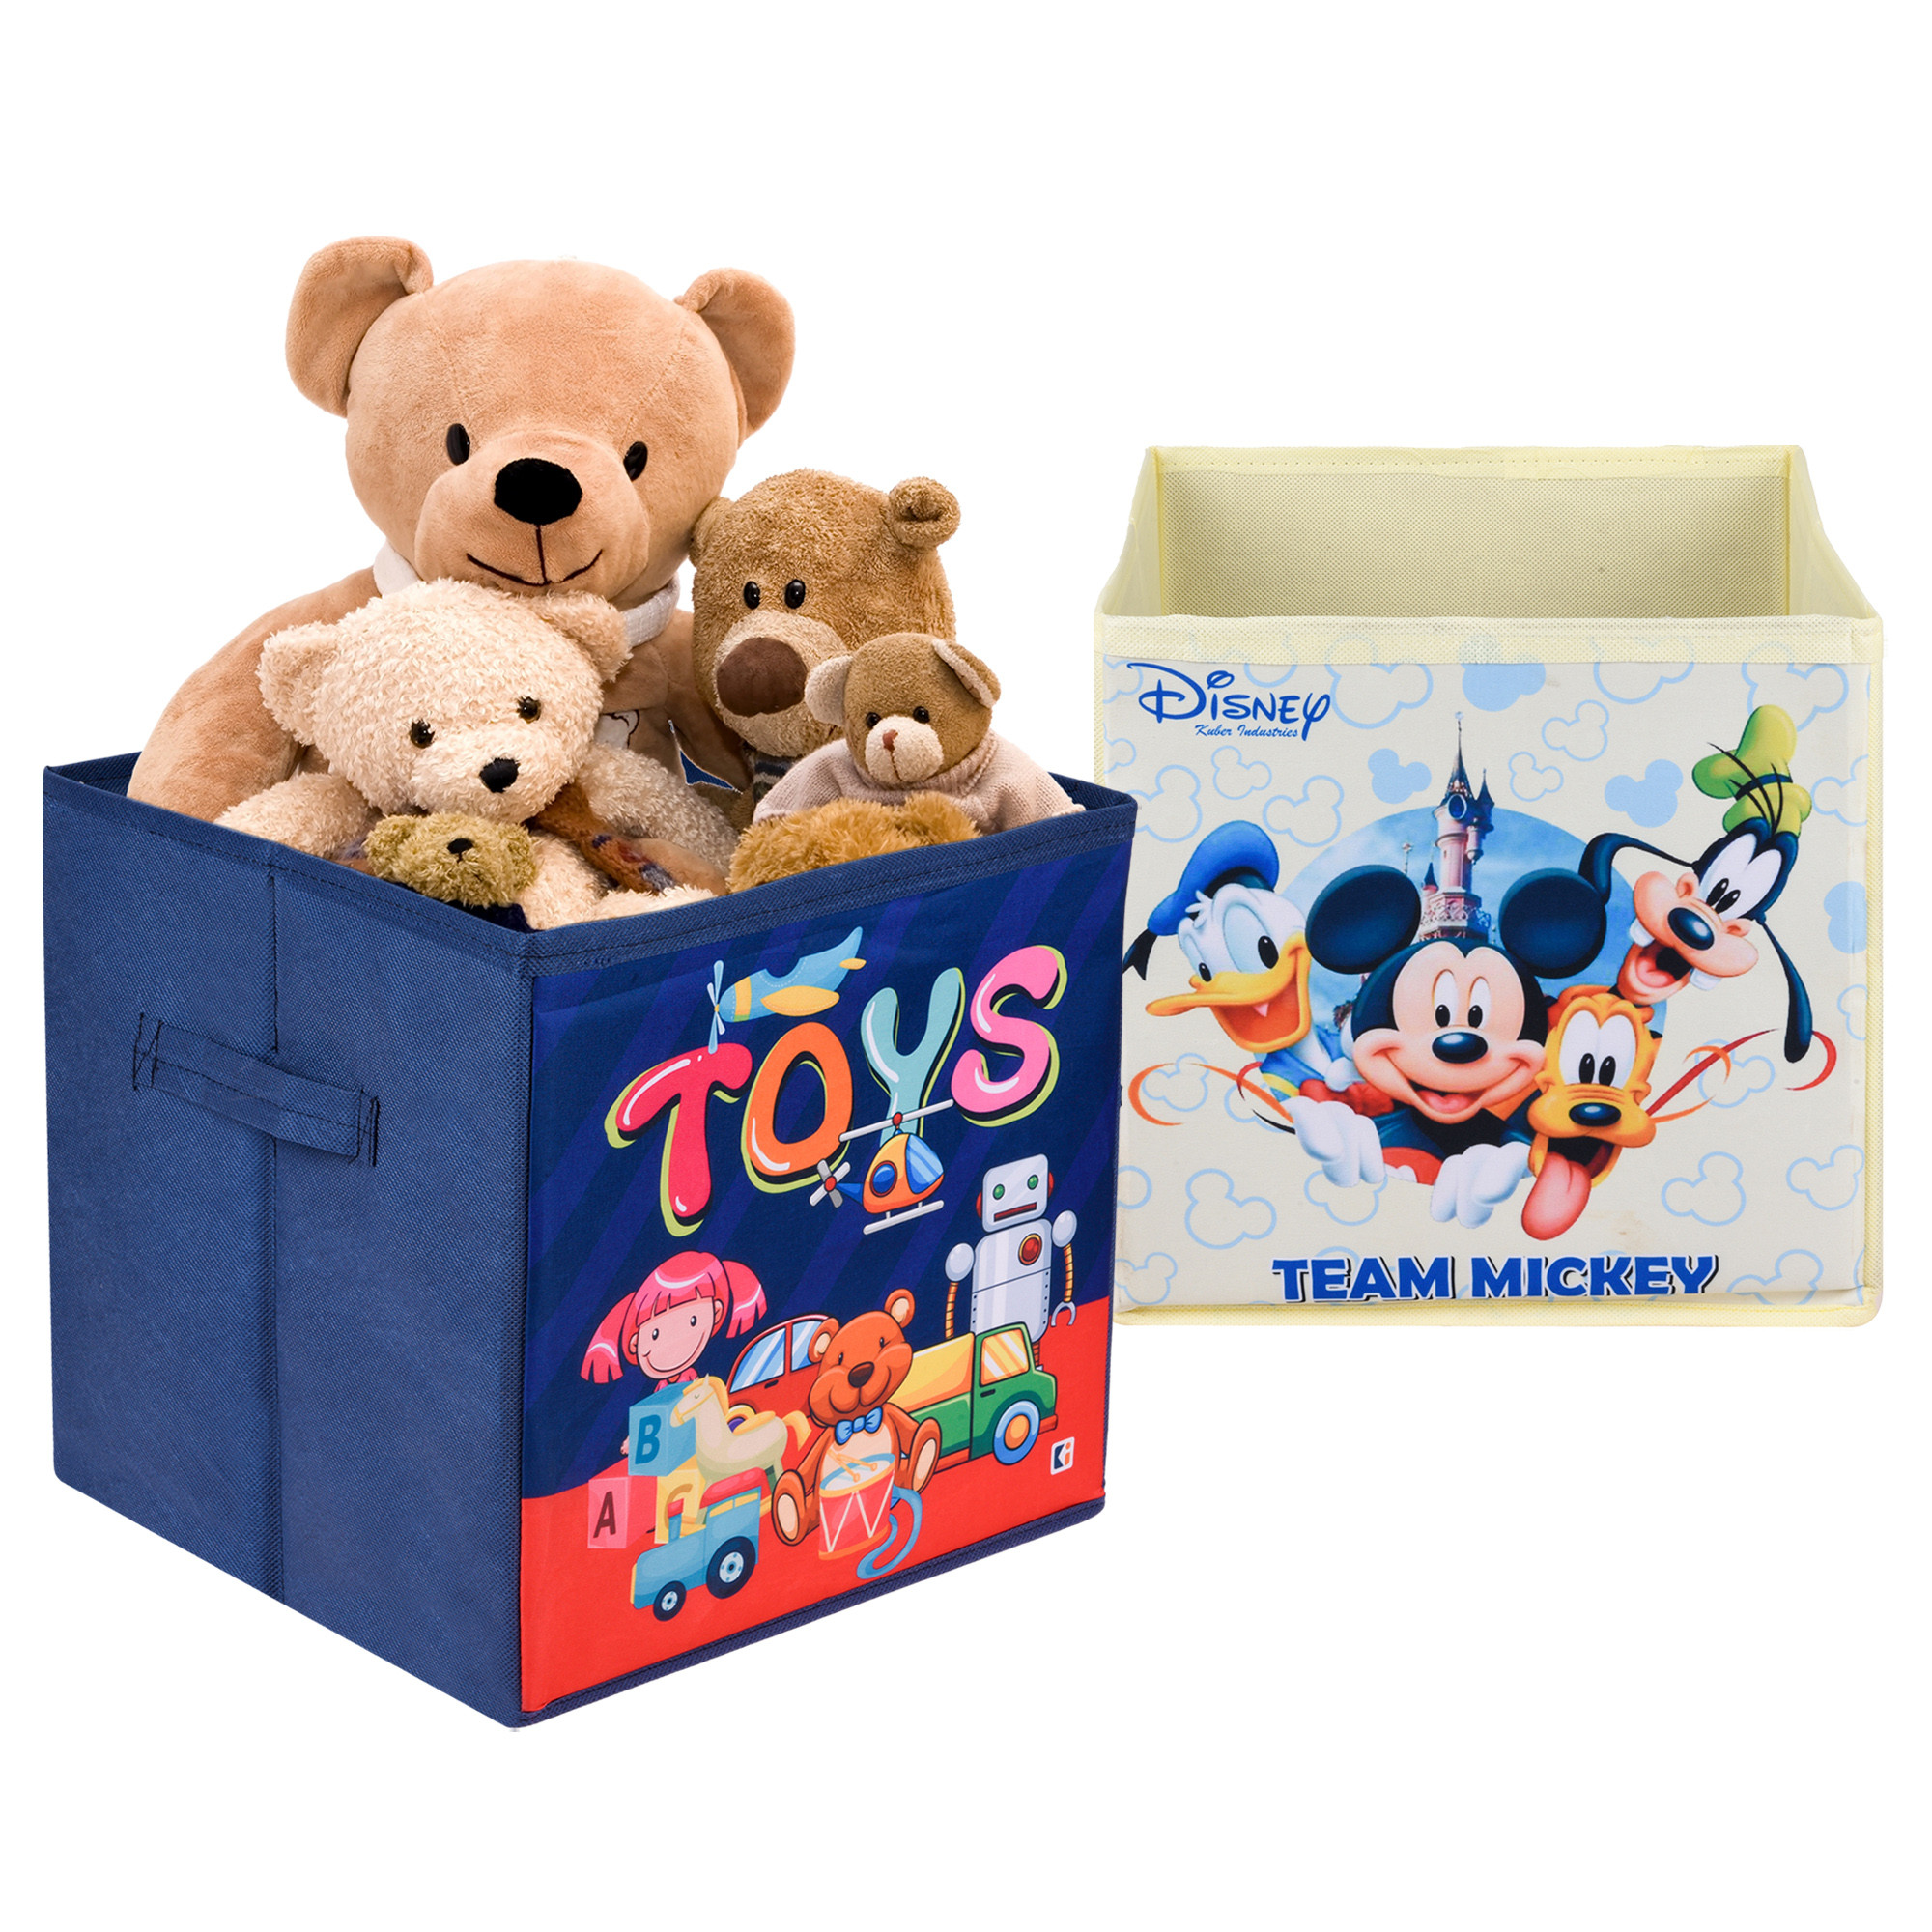 Kuber Industries Storage Box | Square Toy Storage Box | Wardrobe Organizer for Clothes-Books-Toys-Stationary | Drawer Organizer Box with Handle | Disney-Print | Navy Blue & Cream